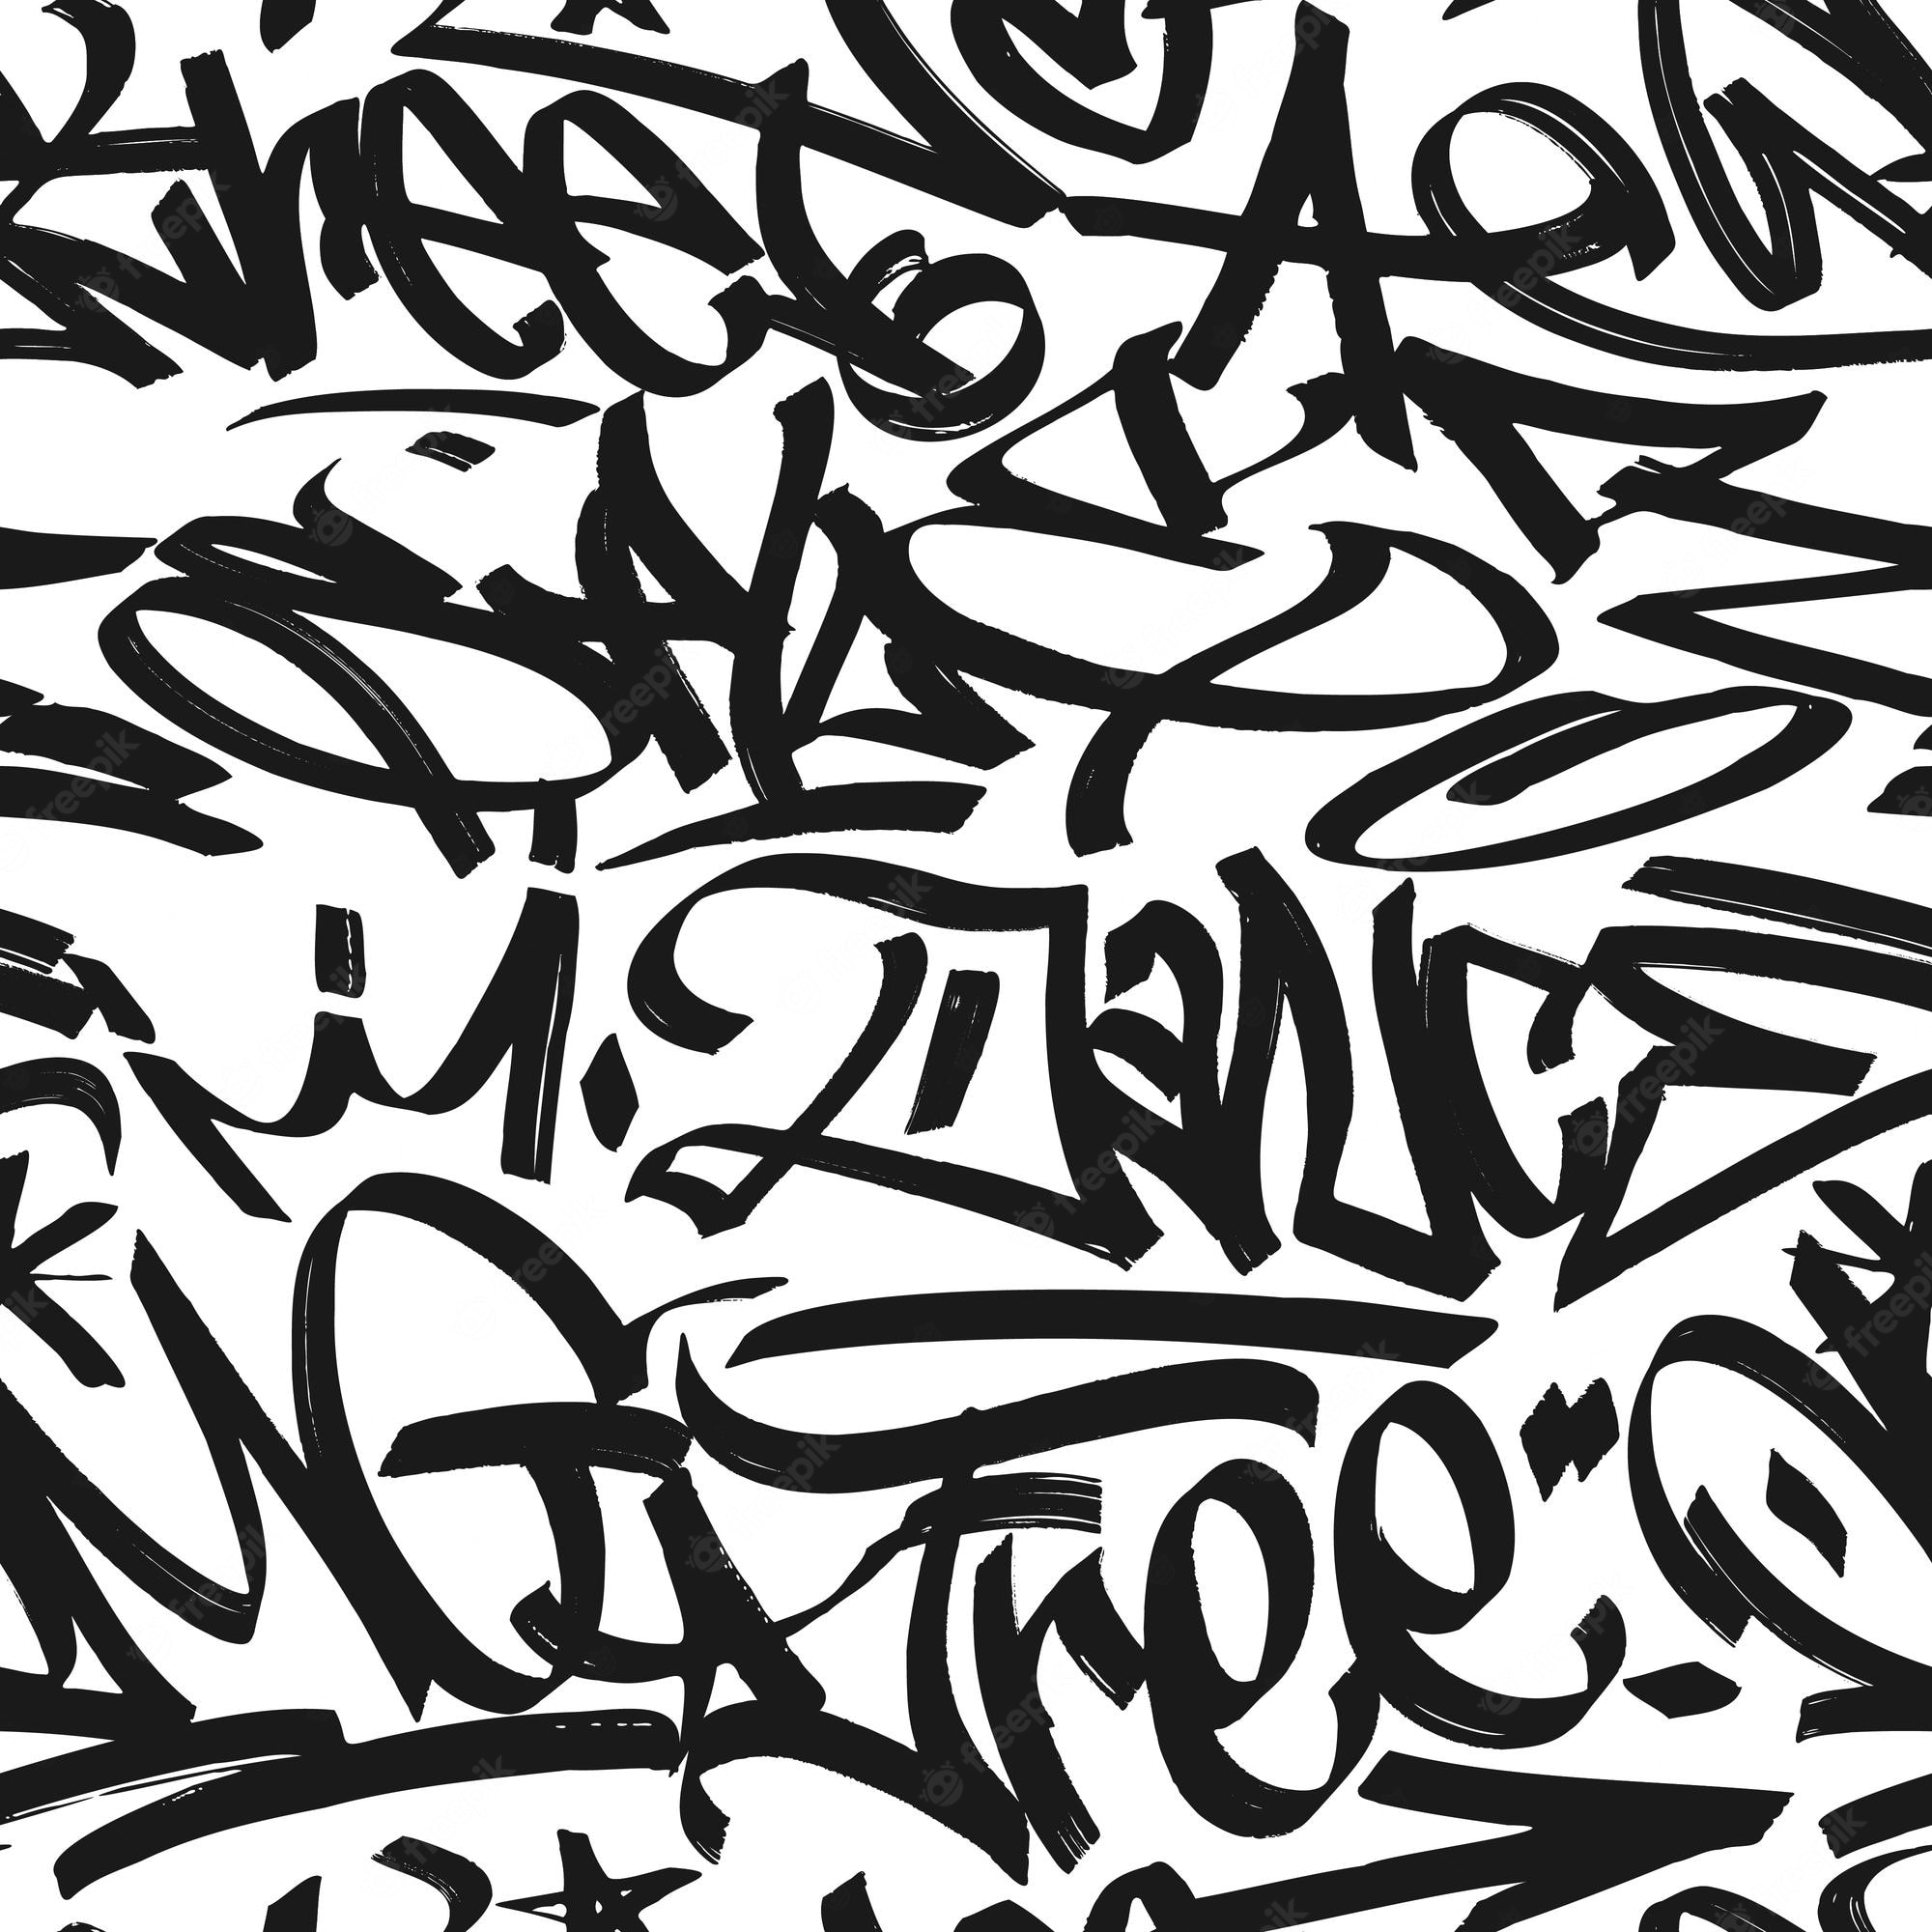 Graffiti letters Image. Free Vectors, & PSD